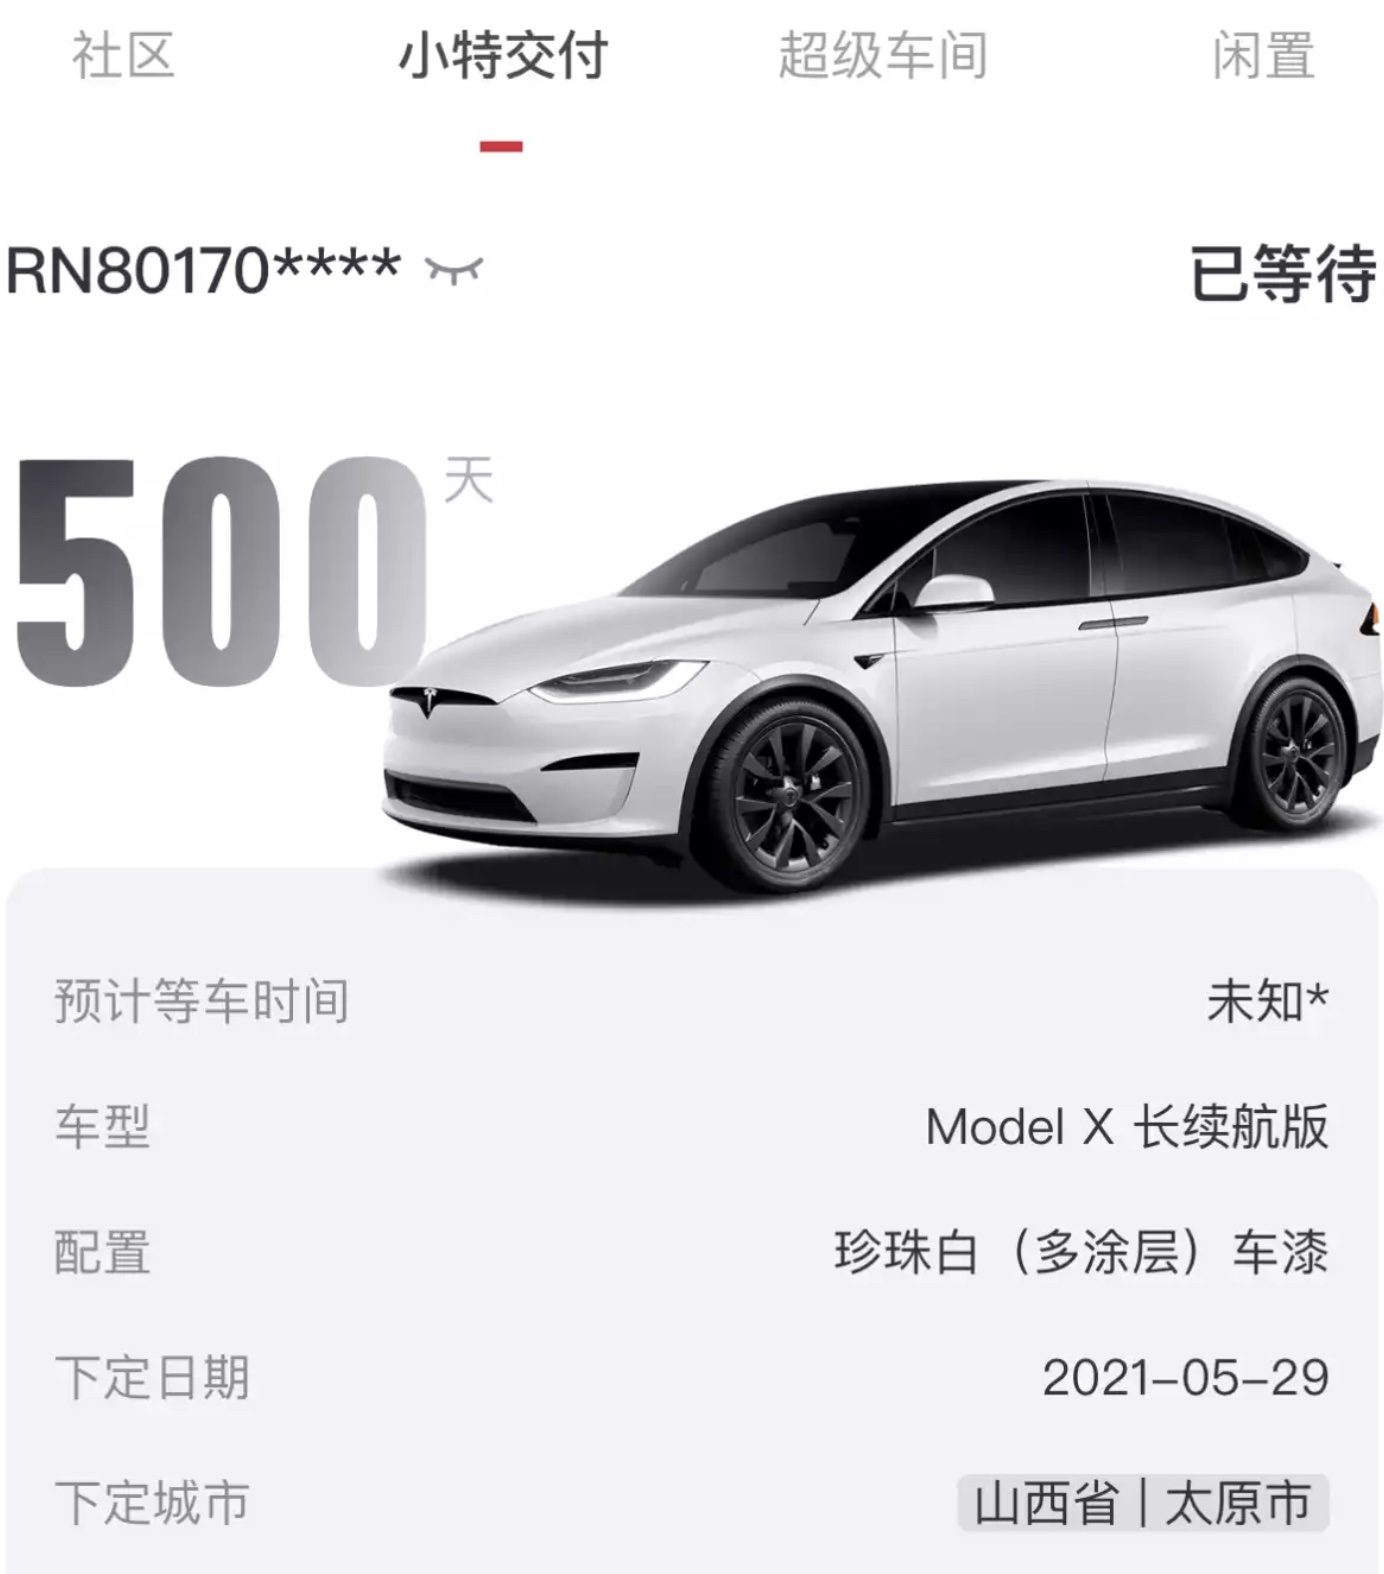 Tesla-mode-x-plaid-deliveries-china